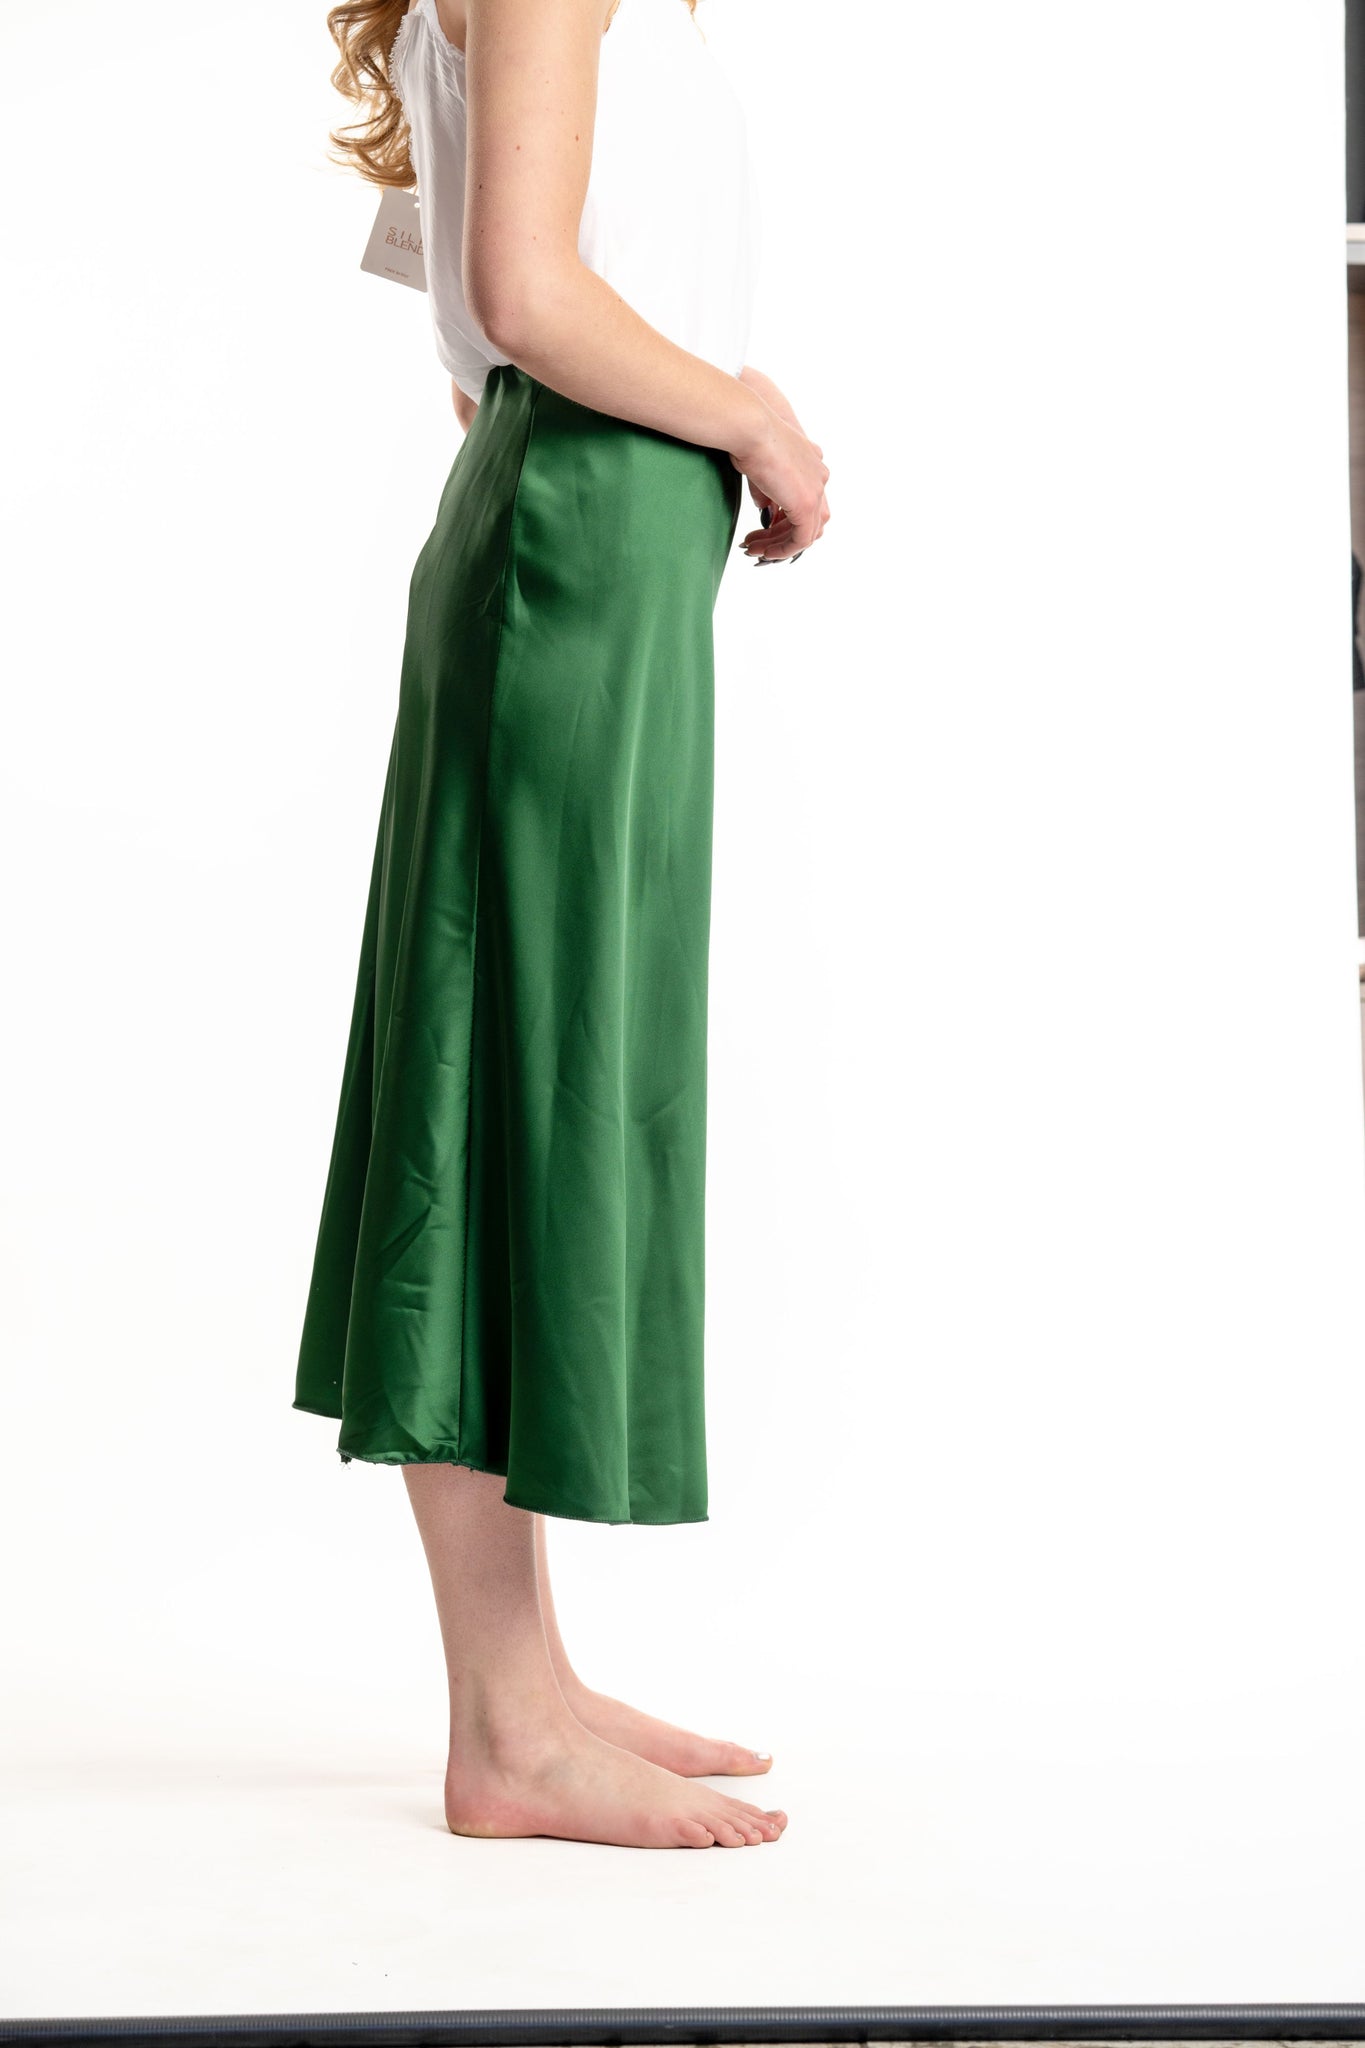 NO S23 Satin Green Skirt